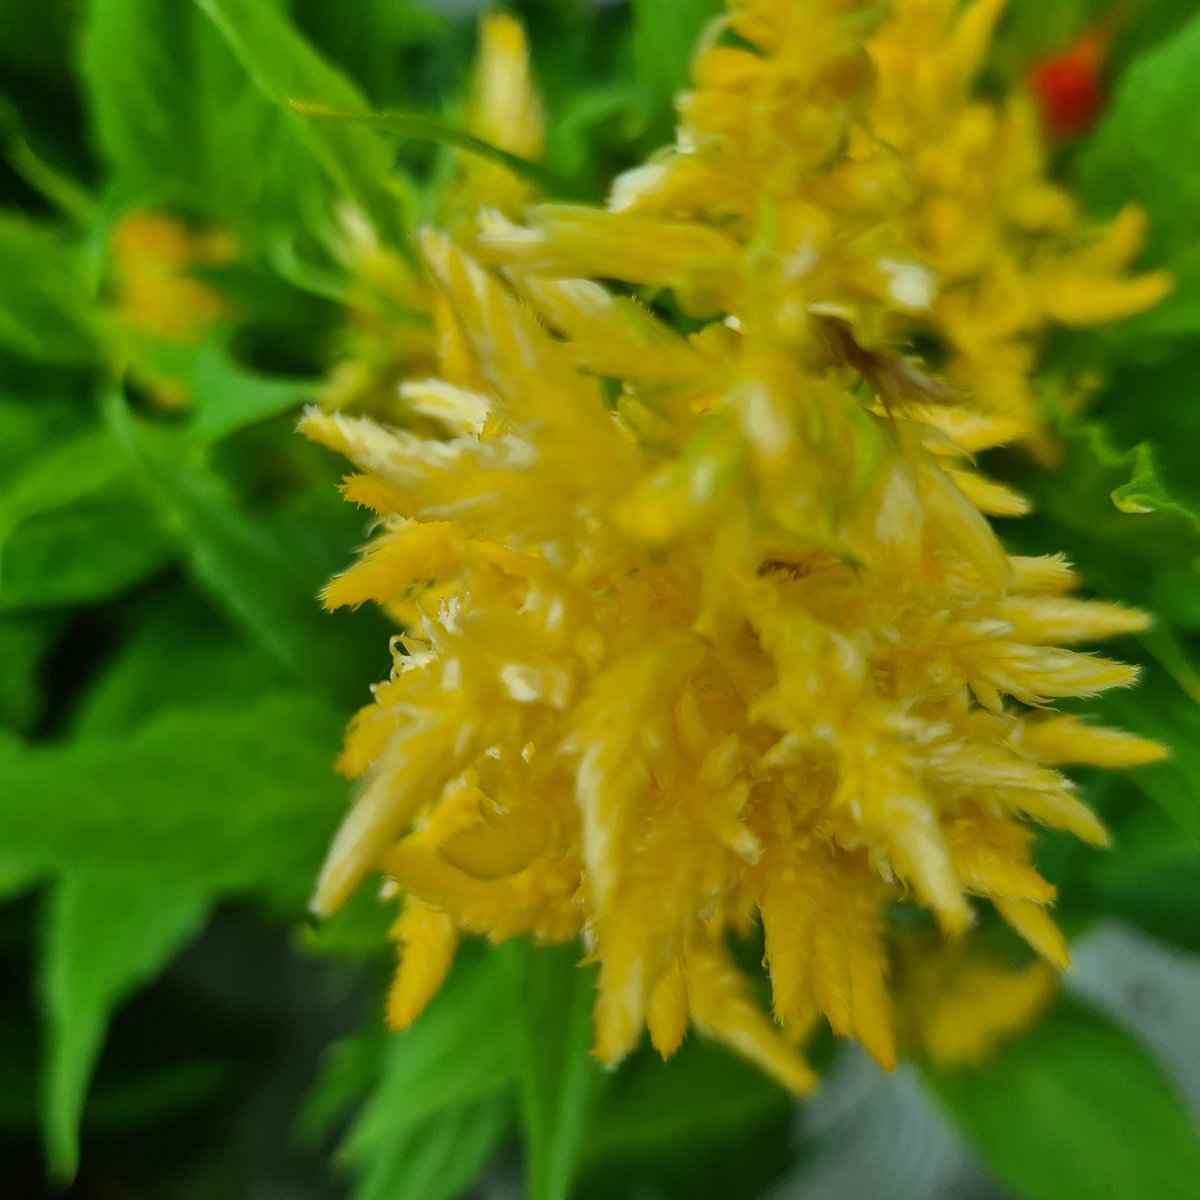 Sunday Yellow floral love.
#SundayYellow 
#staysafe
#beauthentic
@christinedemar 
@mickkellygrows 
@giyireland 
@EcoActiveSocial 
@TinypootIta 
@ecoireland 
@EireTrips 
@CarlowTours 
@Dublinheadshot 
@YourHolidayMag 